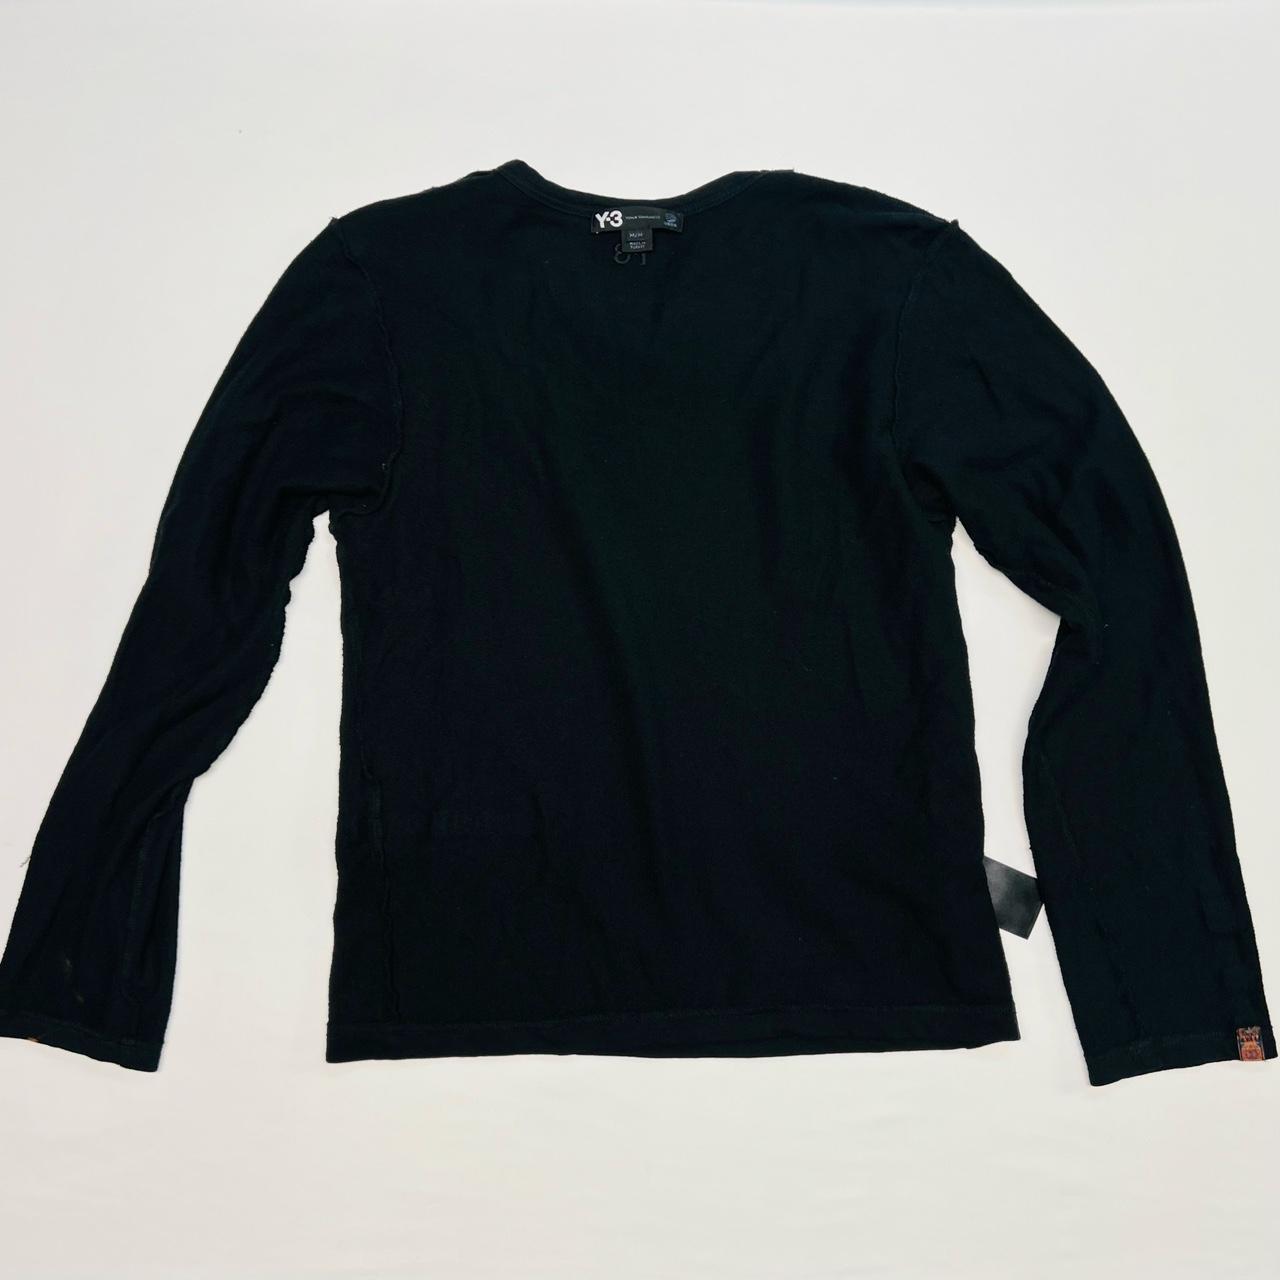 Y-3 x Adidas long sleeve shirt size medium black... - Depop